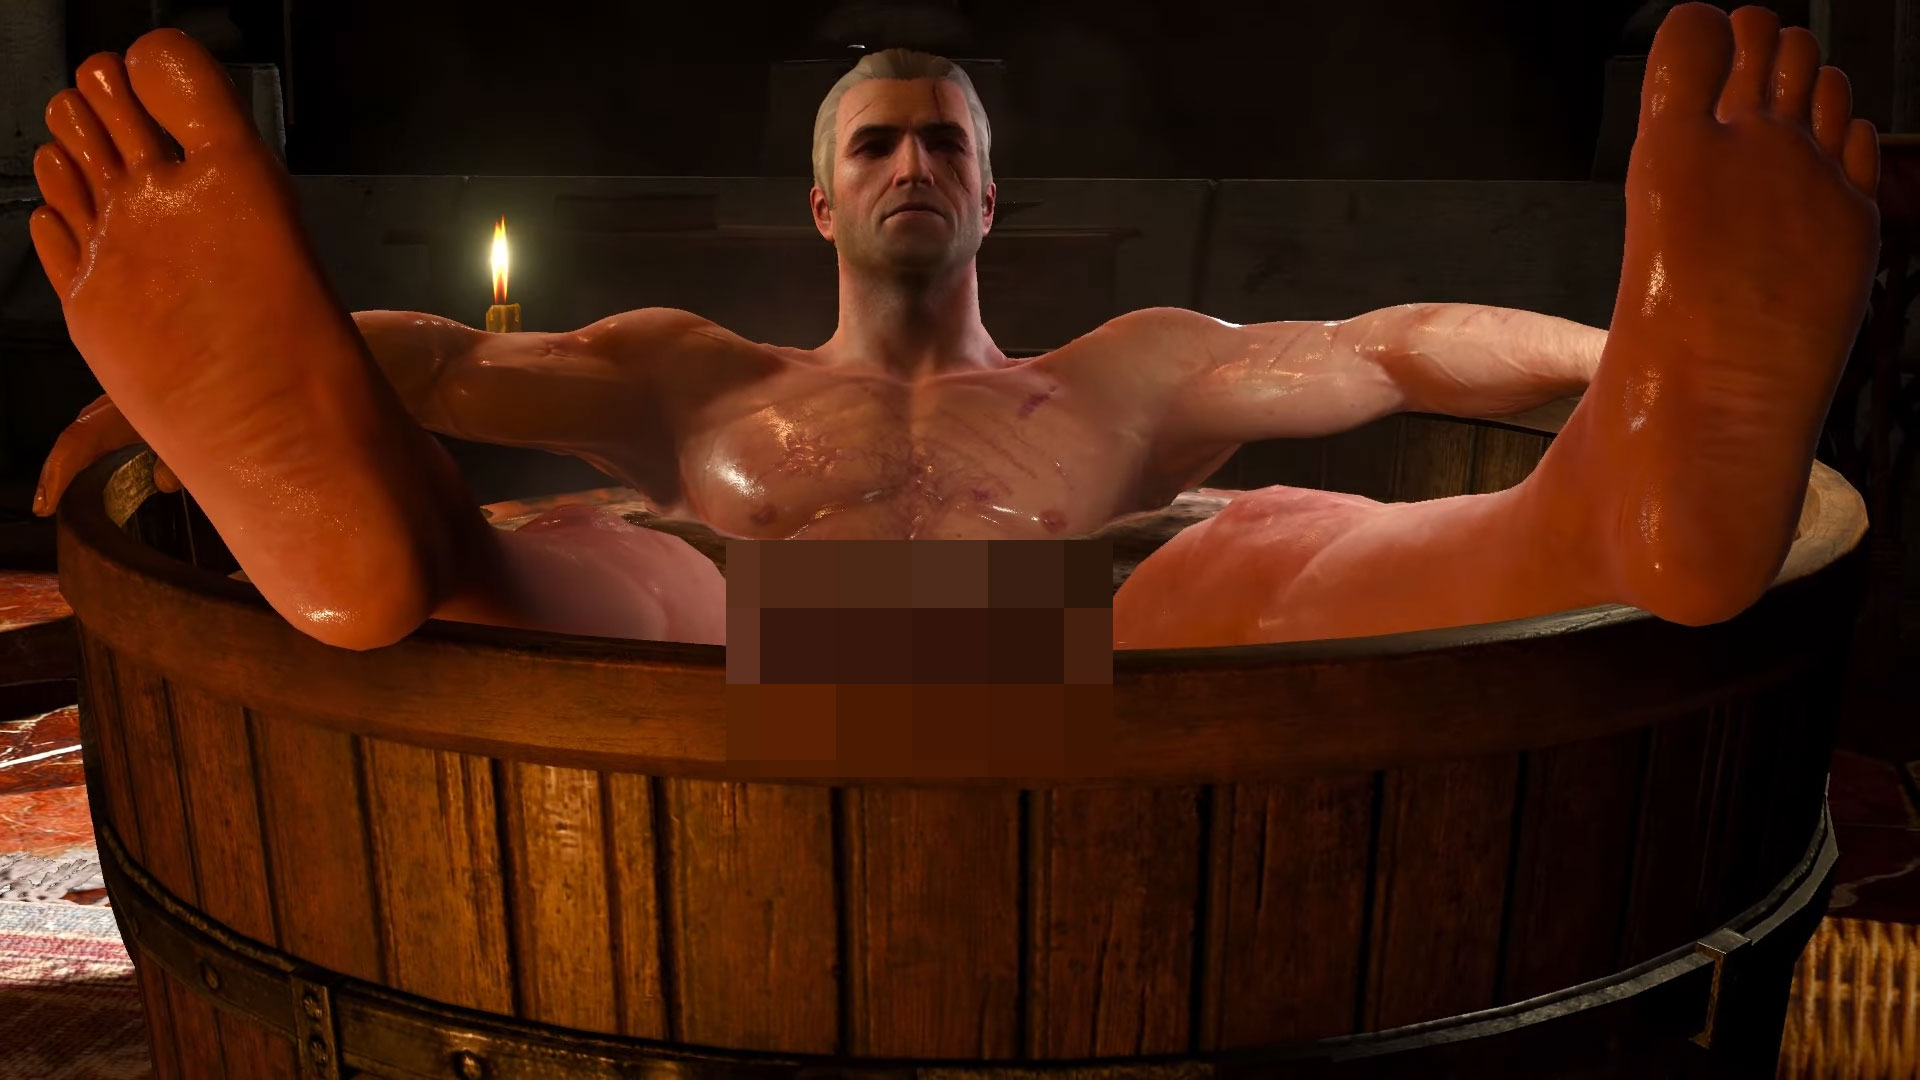 The Witcher 3 devs debated if Geralt bath scene should go ‘whole hog’